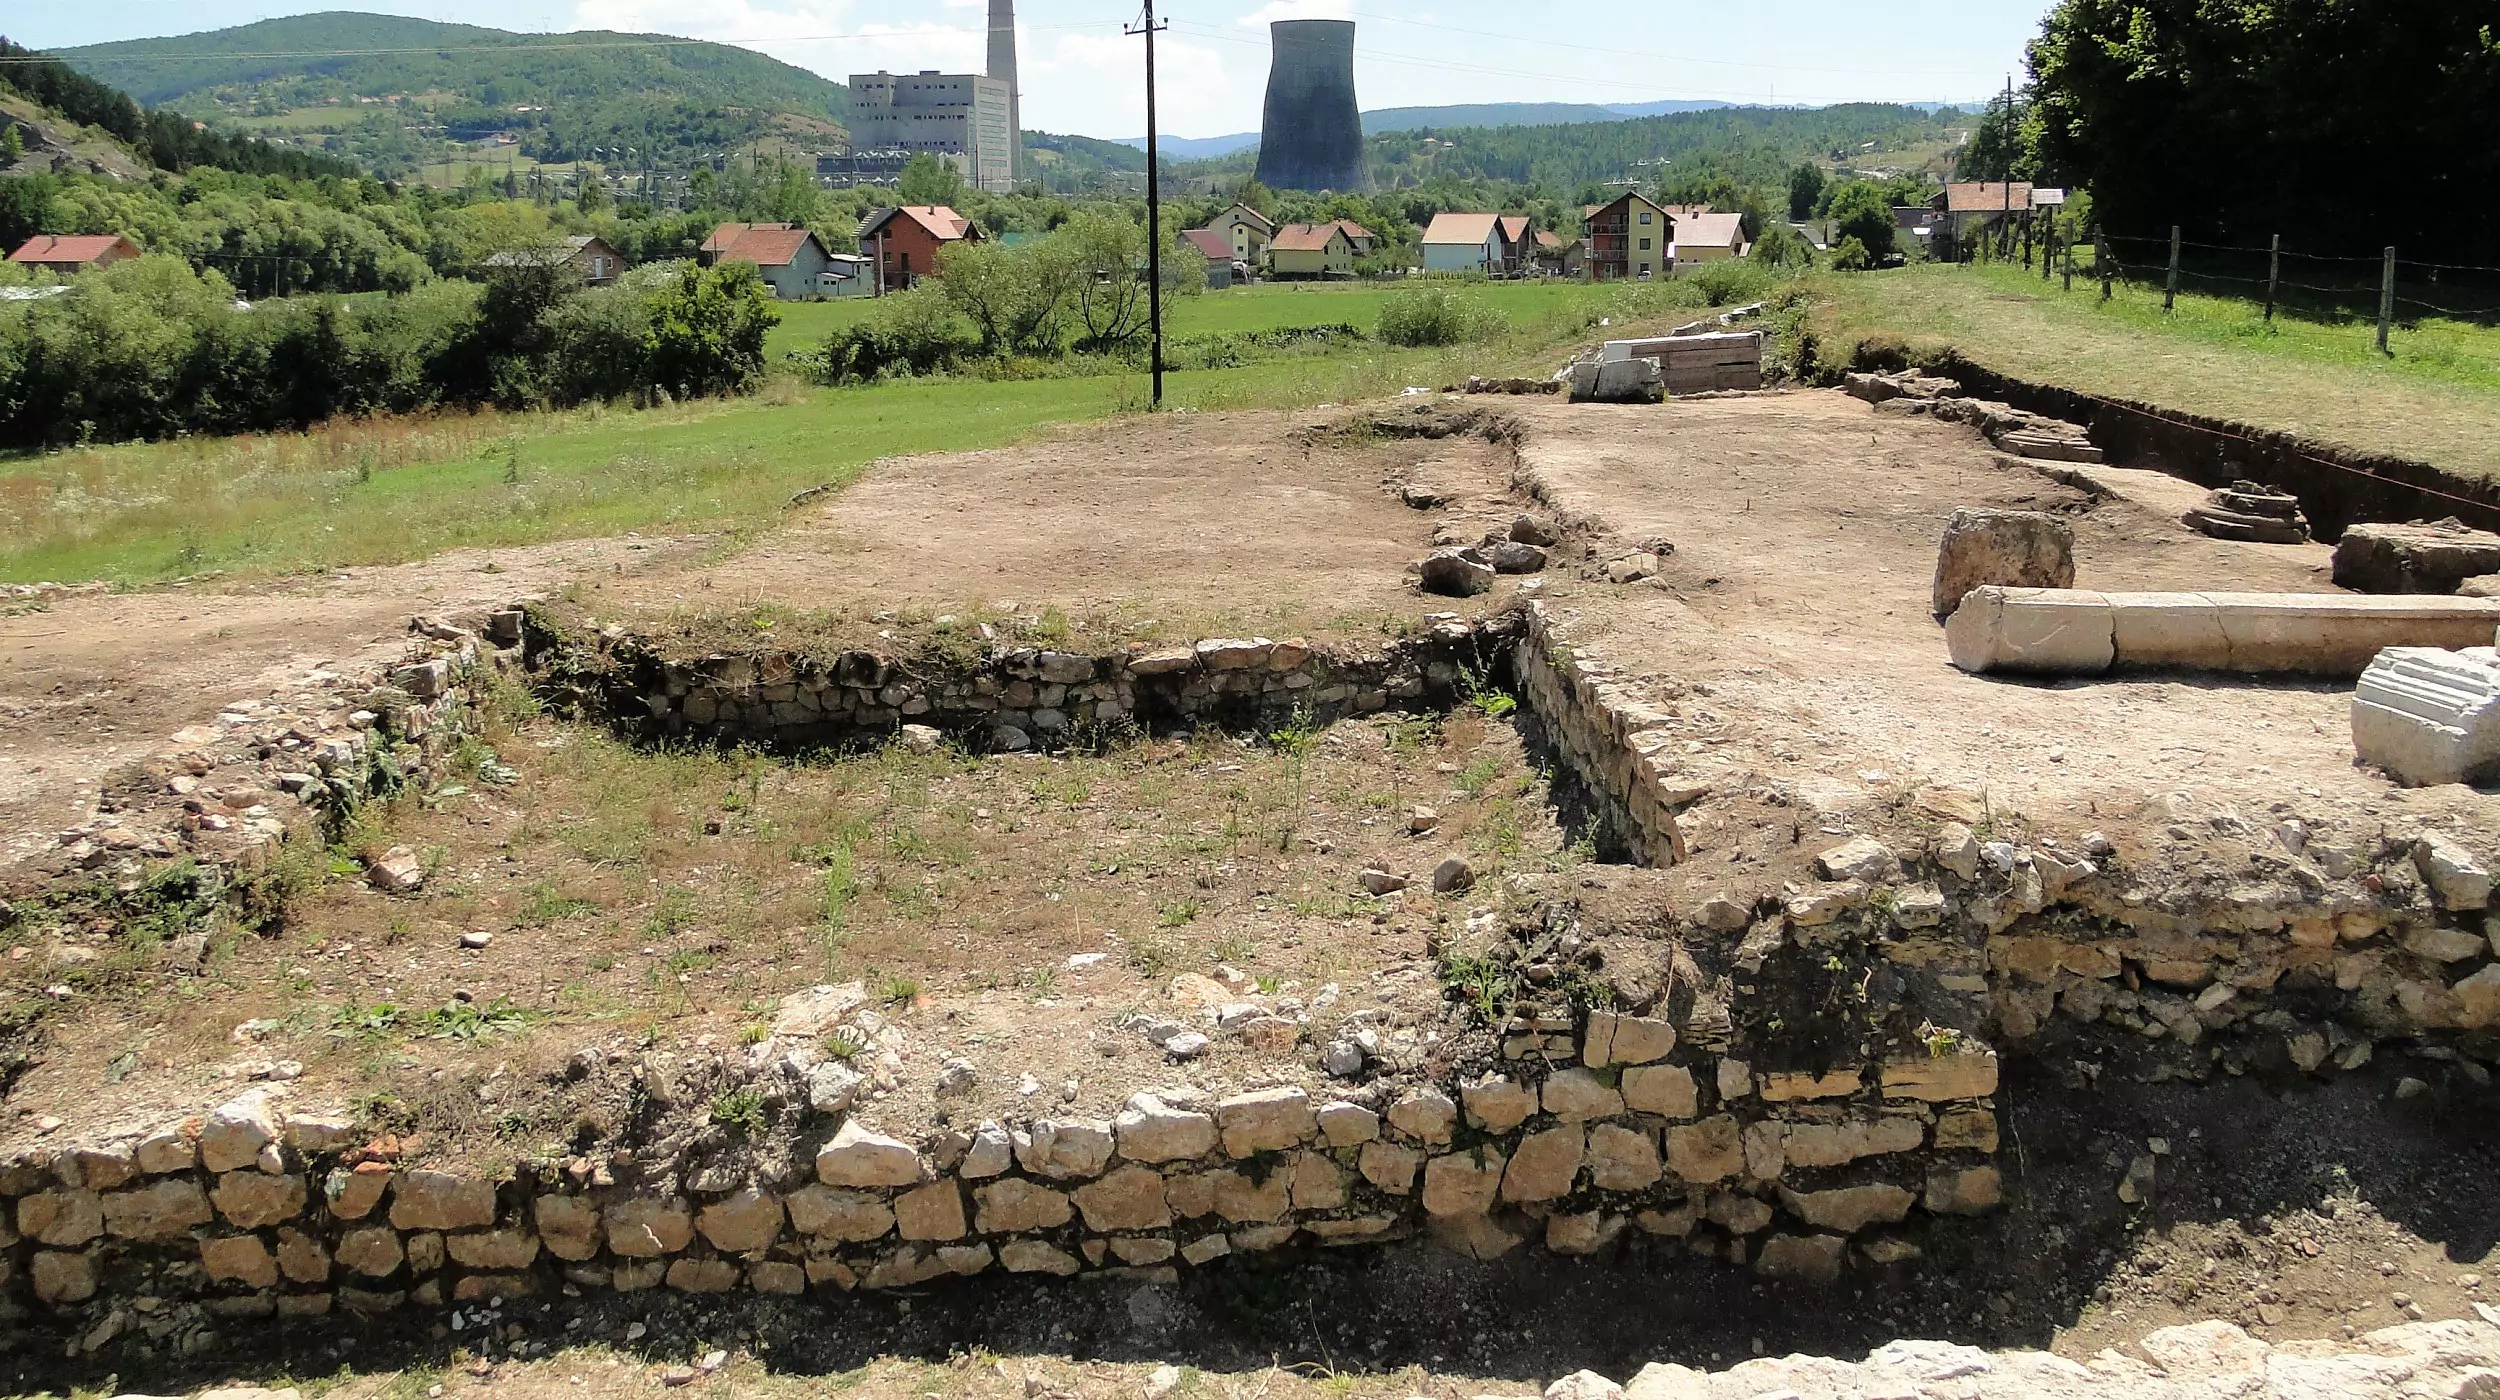 Arheoloska nalazista Municipium S Crna Gora